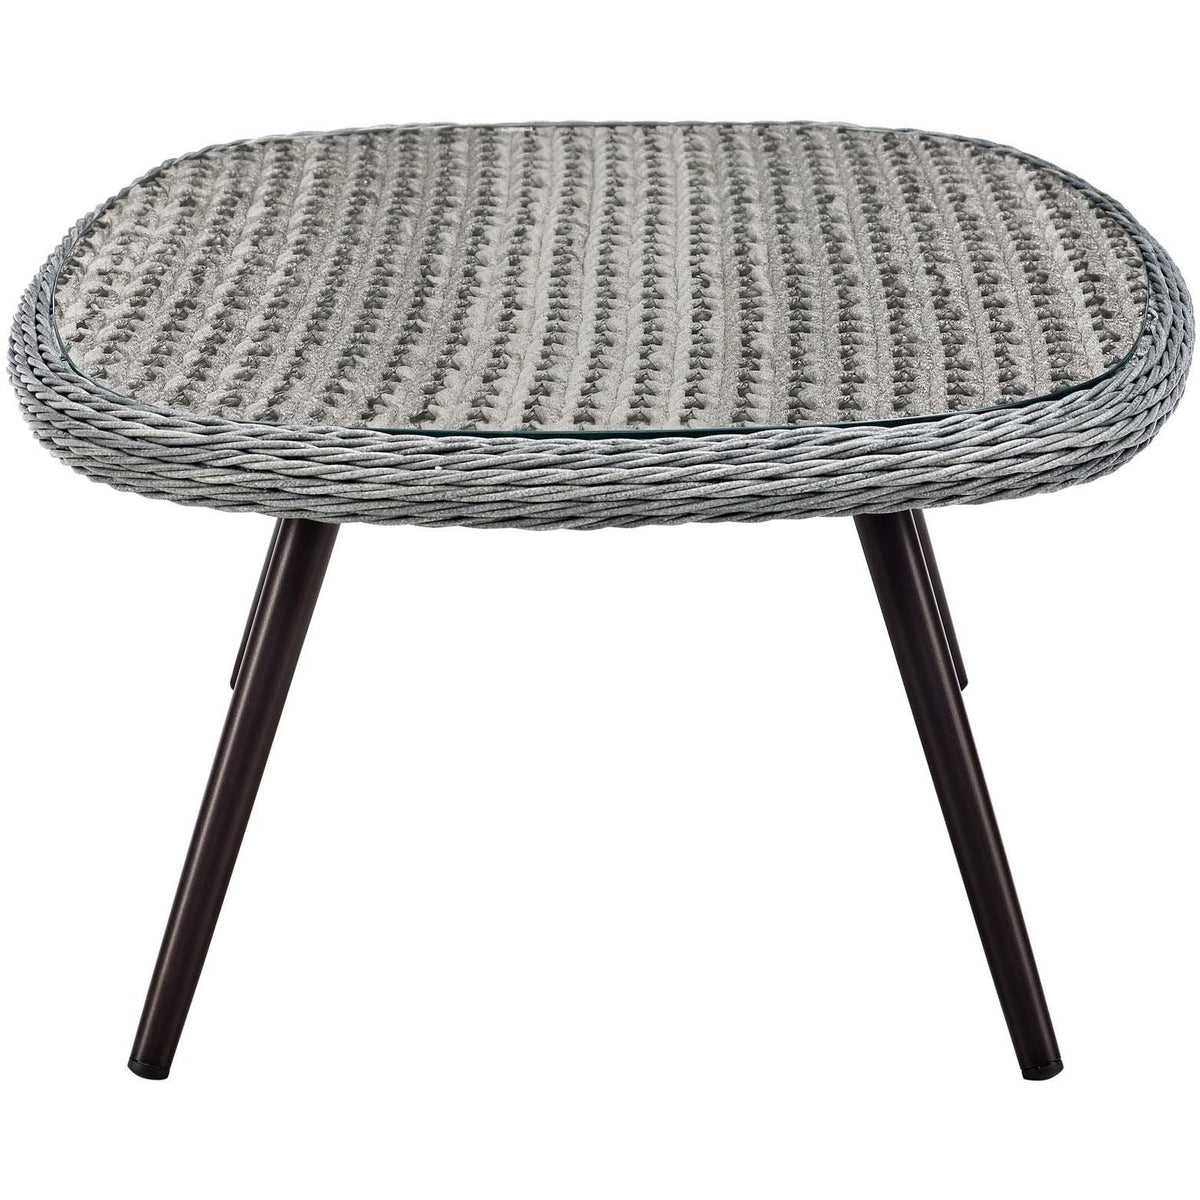 Modway Furniture Modern Endeavor Outdoor Patio Wicker Rattan Coffee Table - EEI-3026